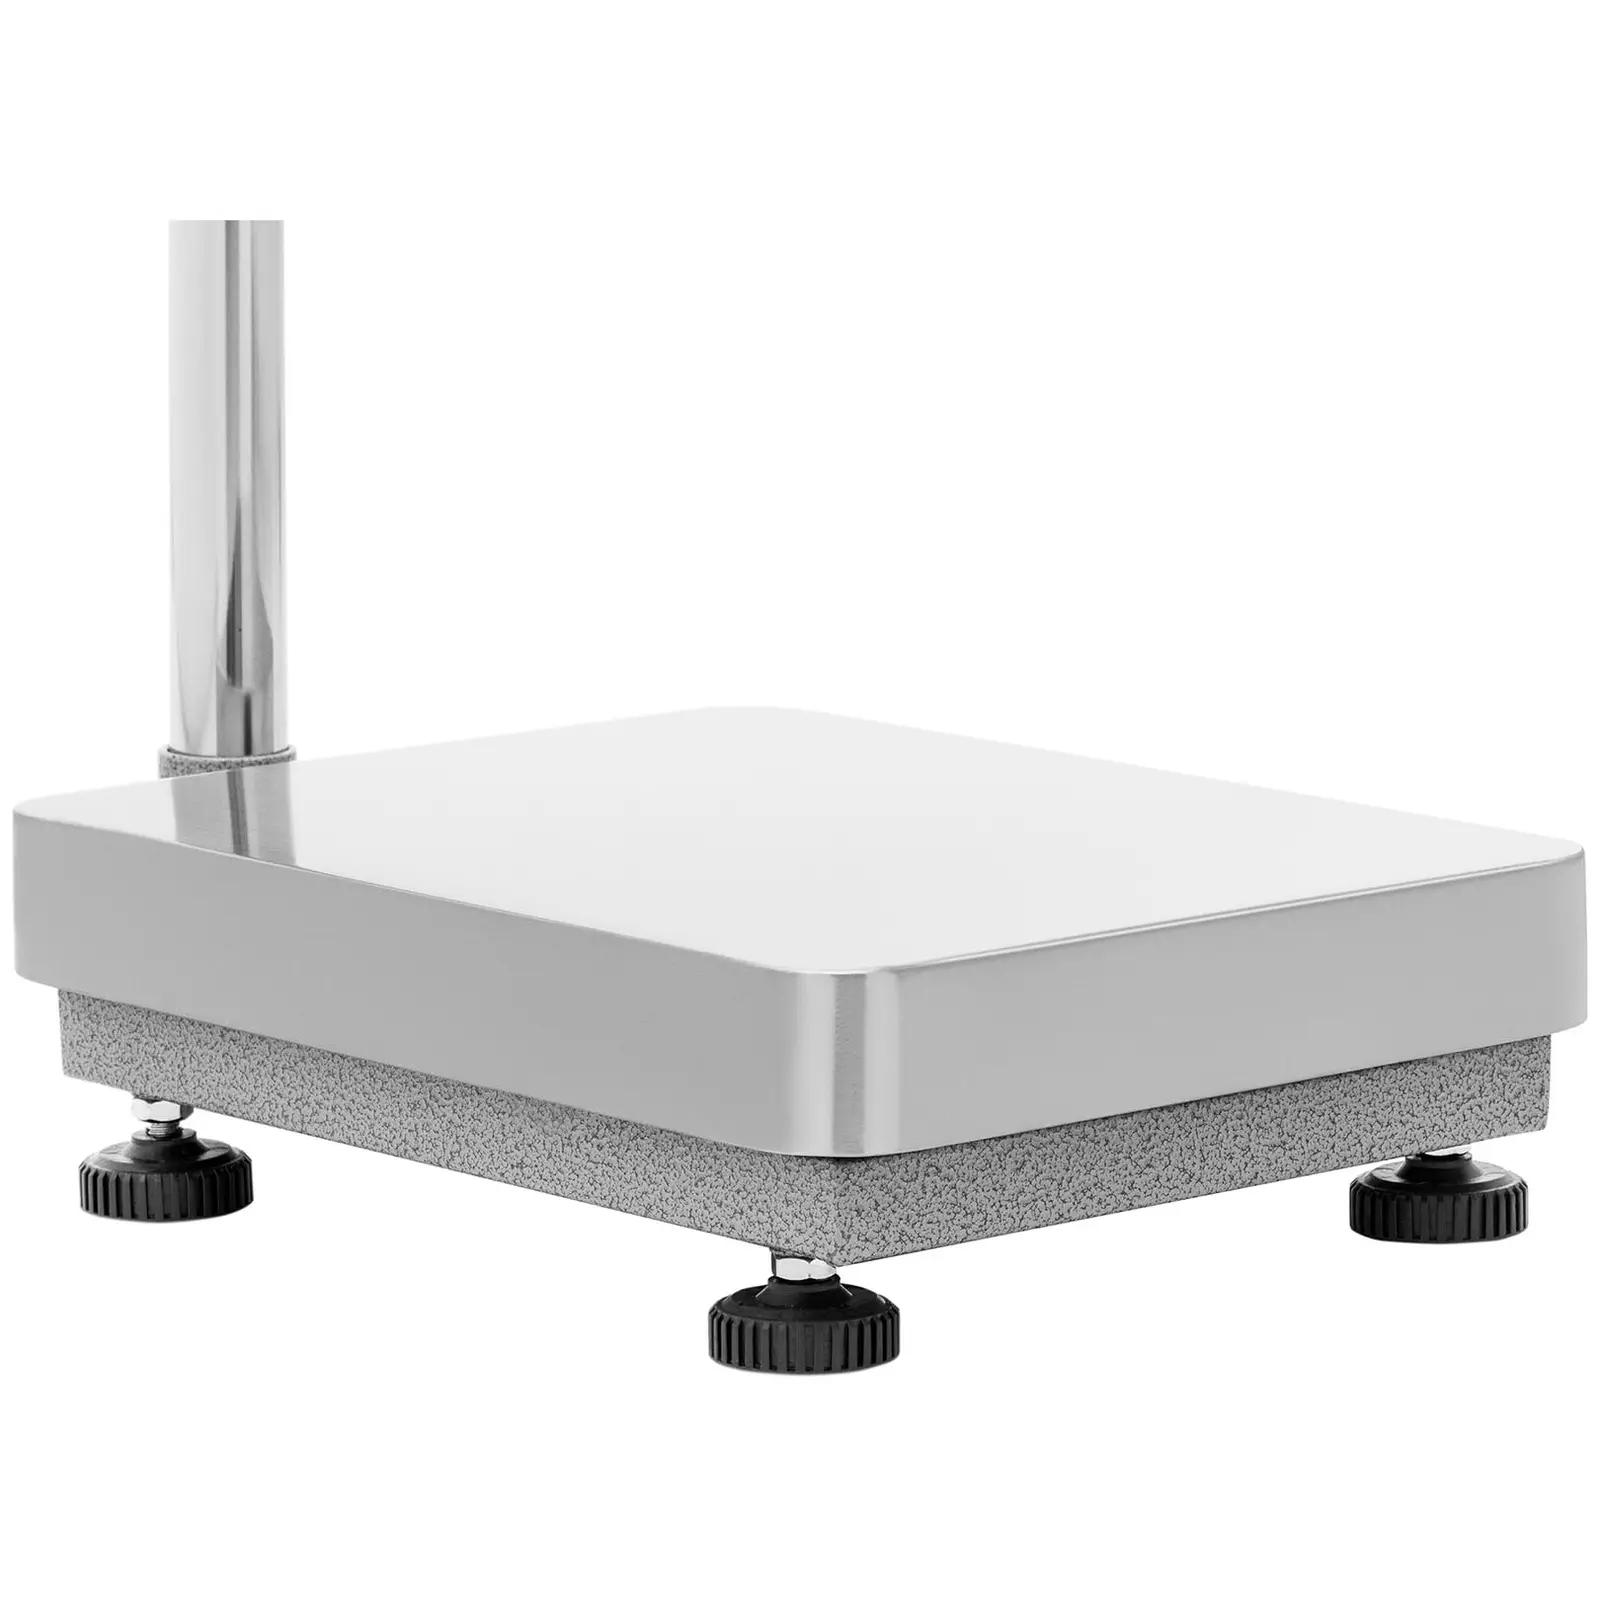 Balança de plataforma - luz de aviso - 30 kg / 0,001 kg - 300 x 400 mm - kg/lb